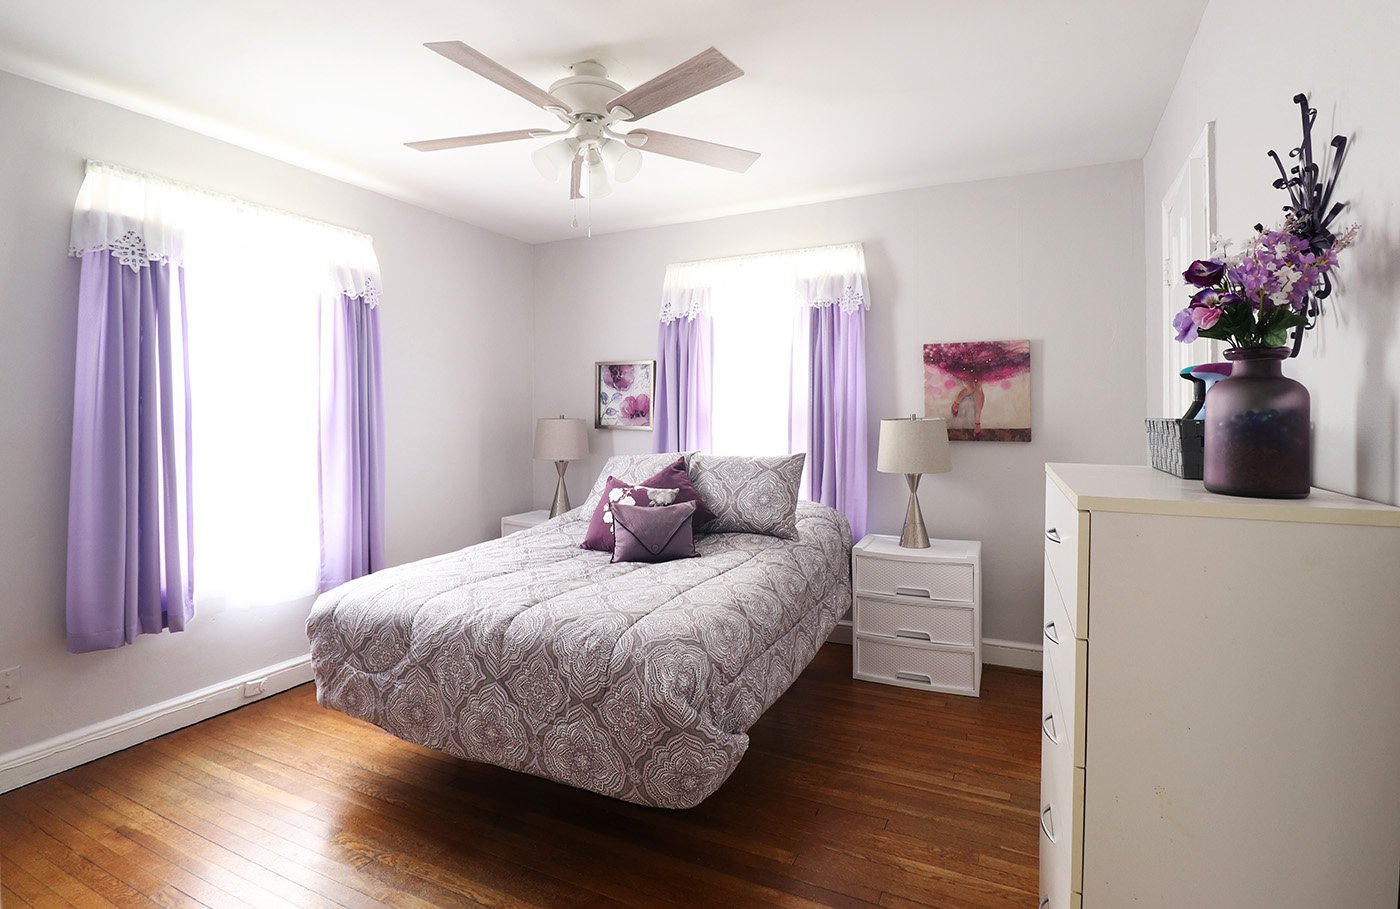 Main Bedroom in Shades of Purple